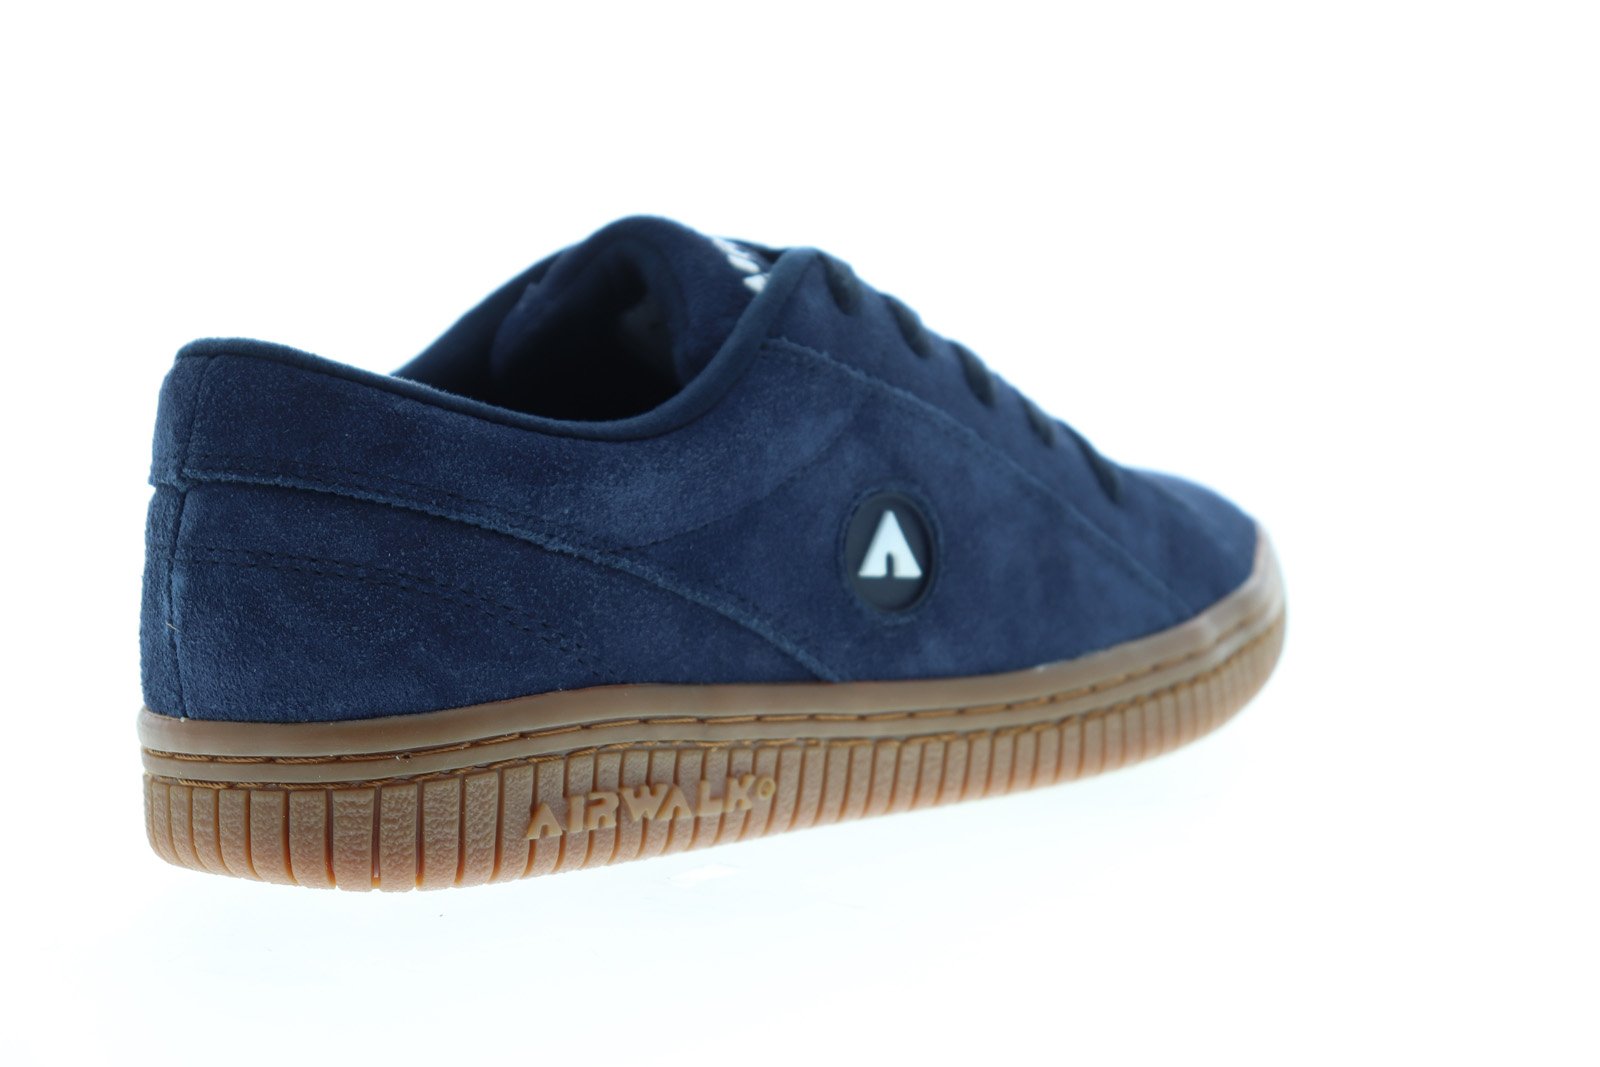 airwalk blue suede shoes